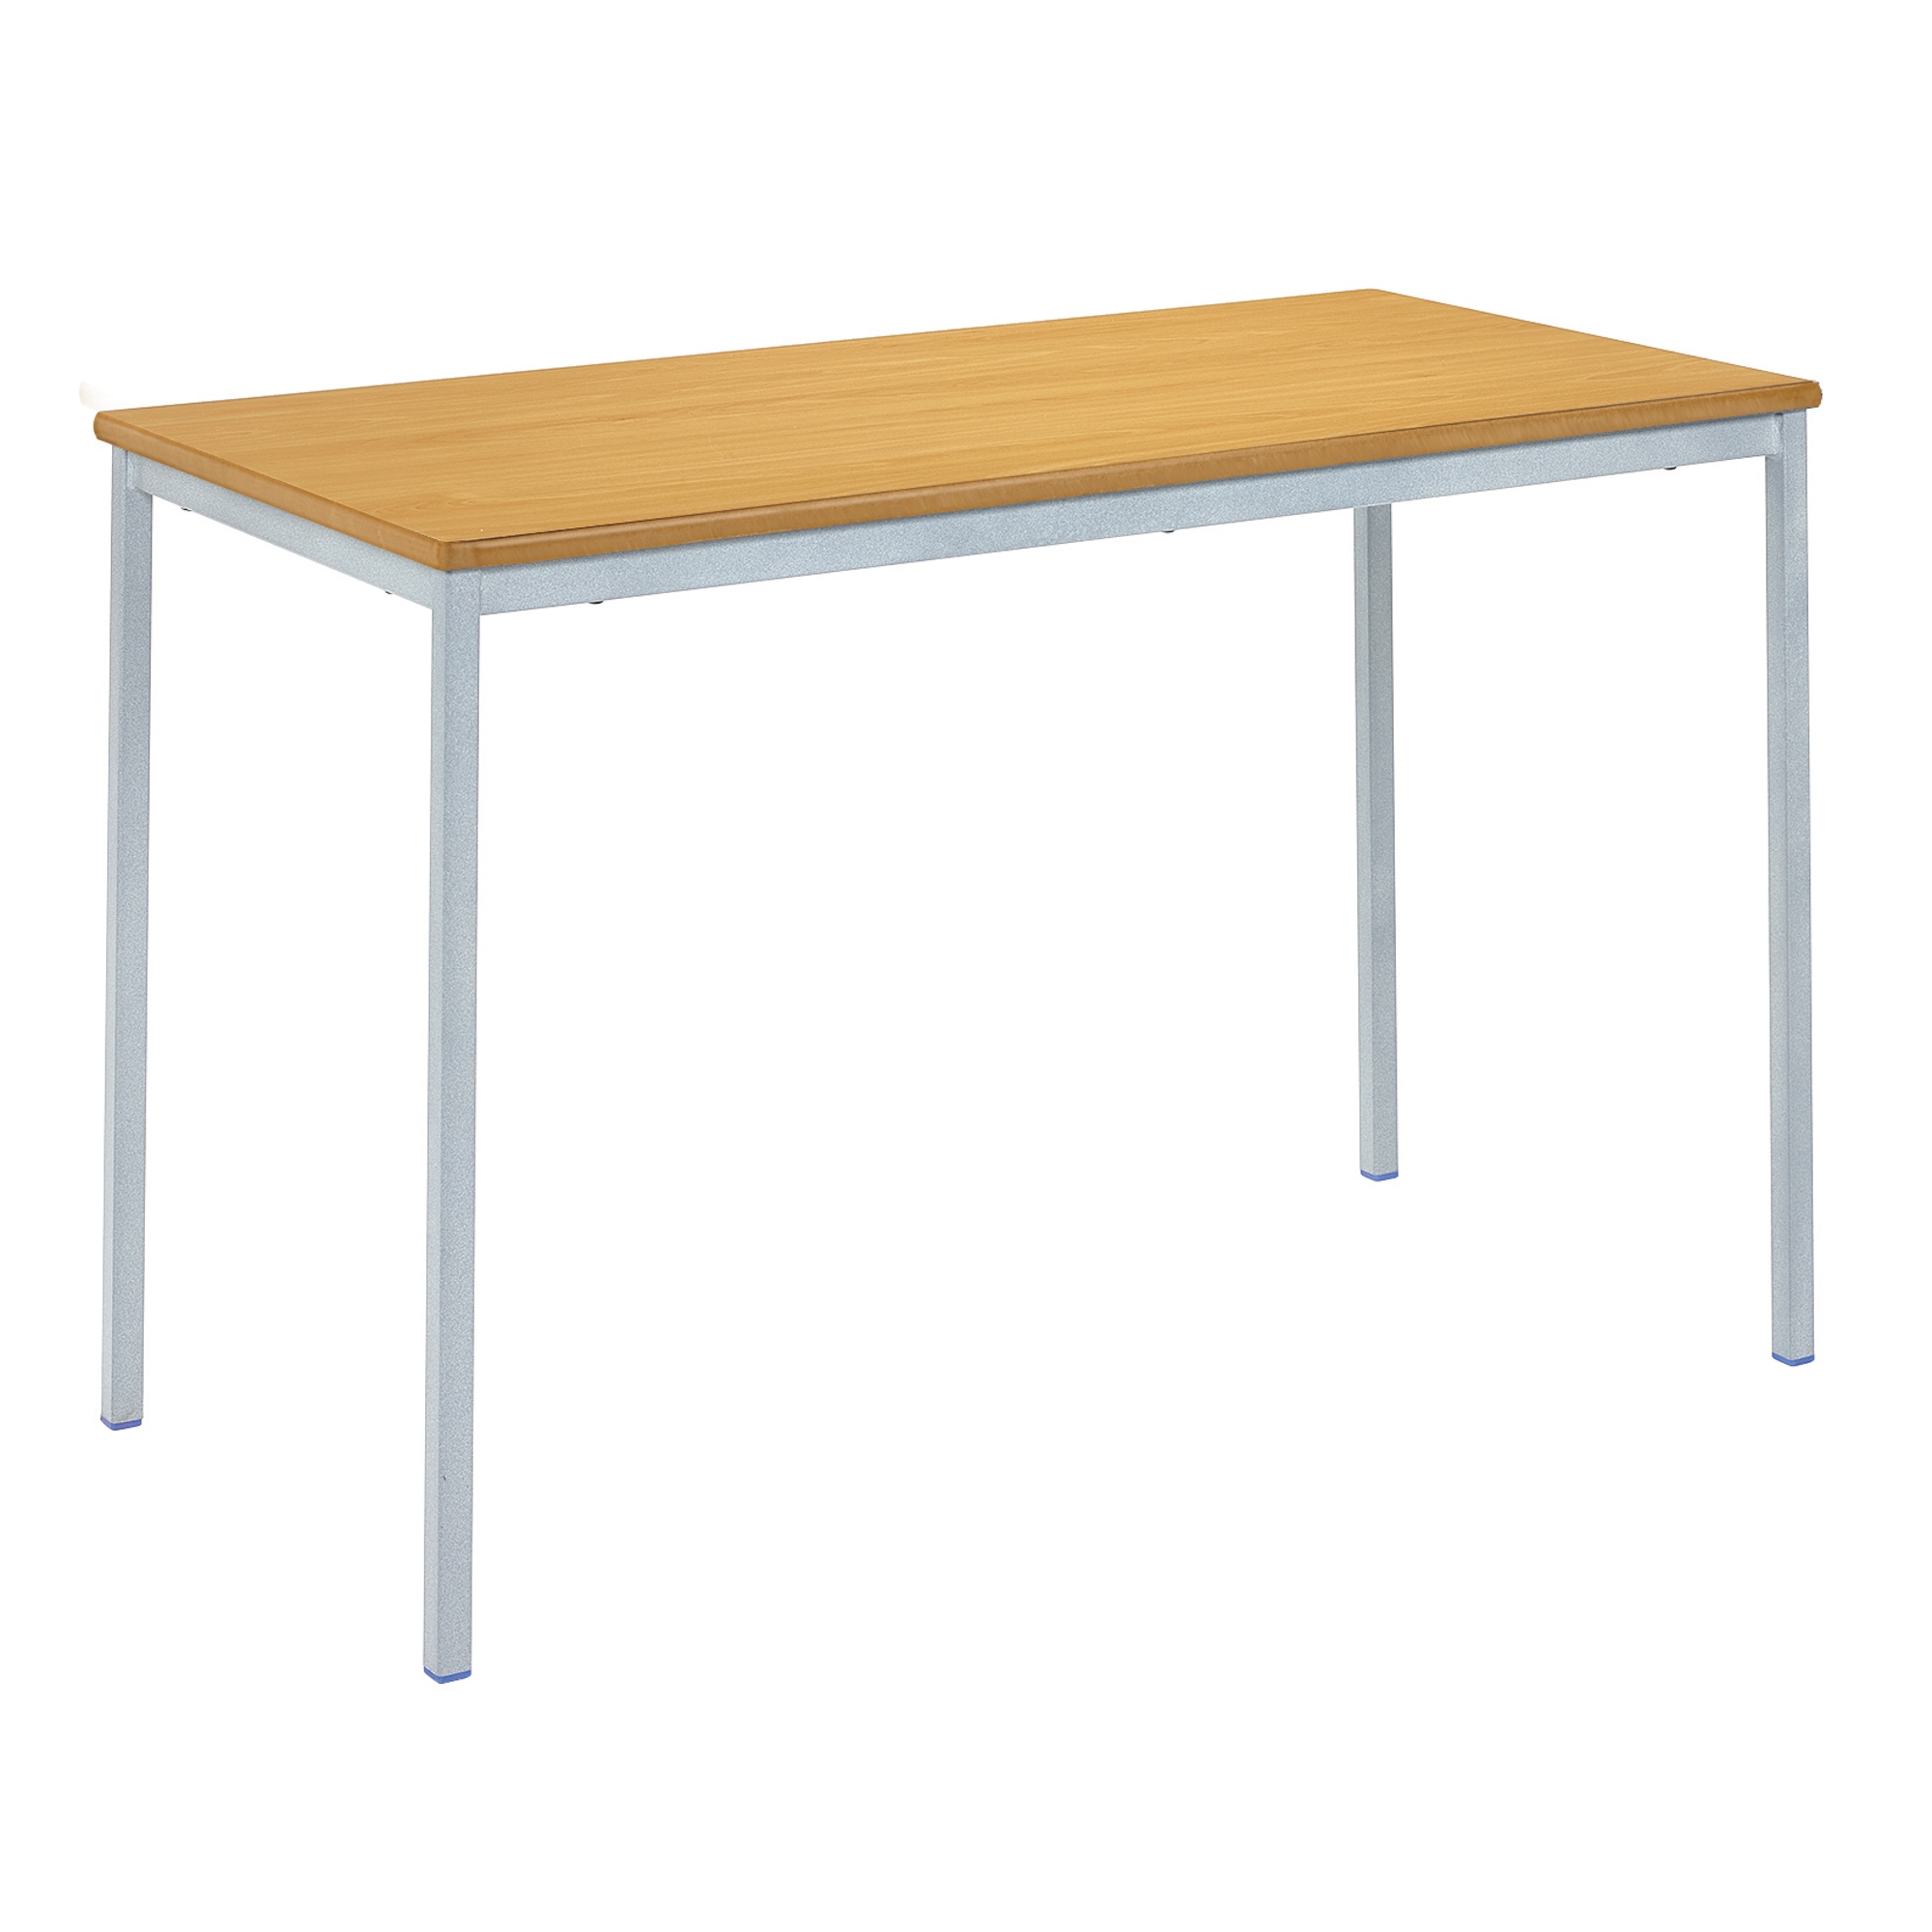 Classmates Rectangular Fully Welded Classroom Table - 1100 x 550 x 640mm - Beech